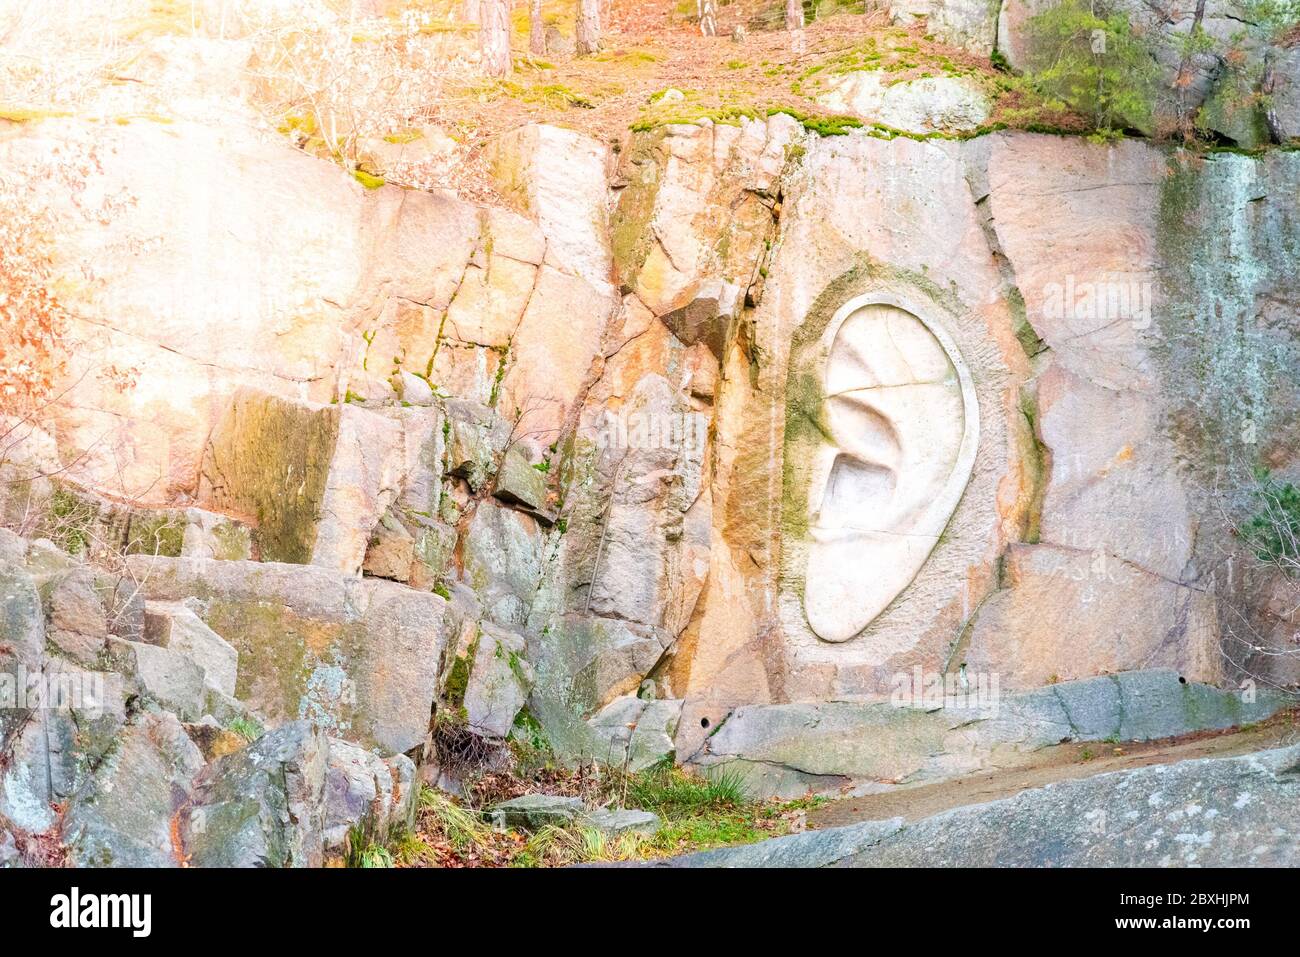 LIPNICE NAD SAZAVOU, CZECH REPUBLIC - DECEMBER 31, 2018: Bretschneider's Ear scuplture in old granite rock quarry near Lipnice Castle. Stock Photo